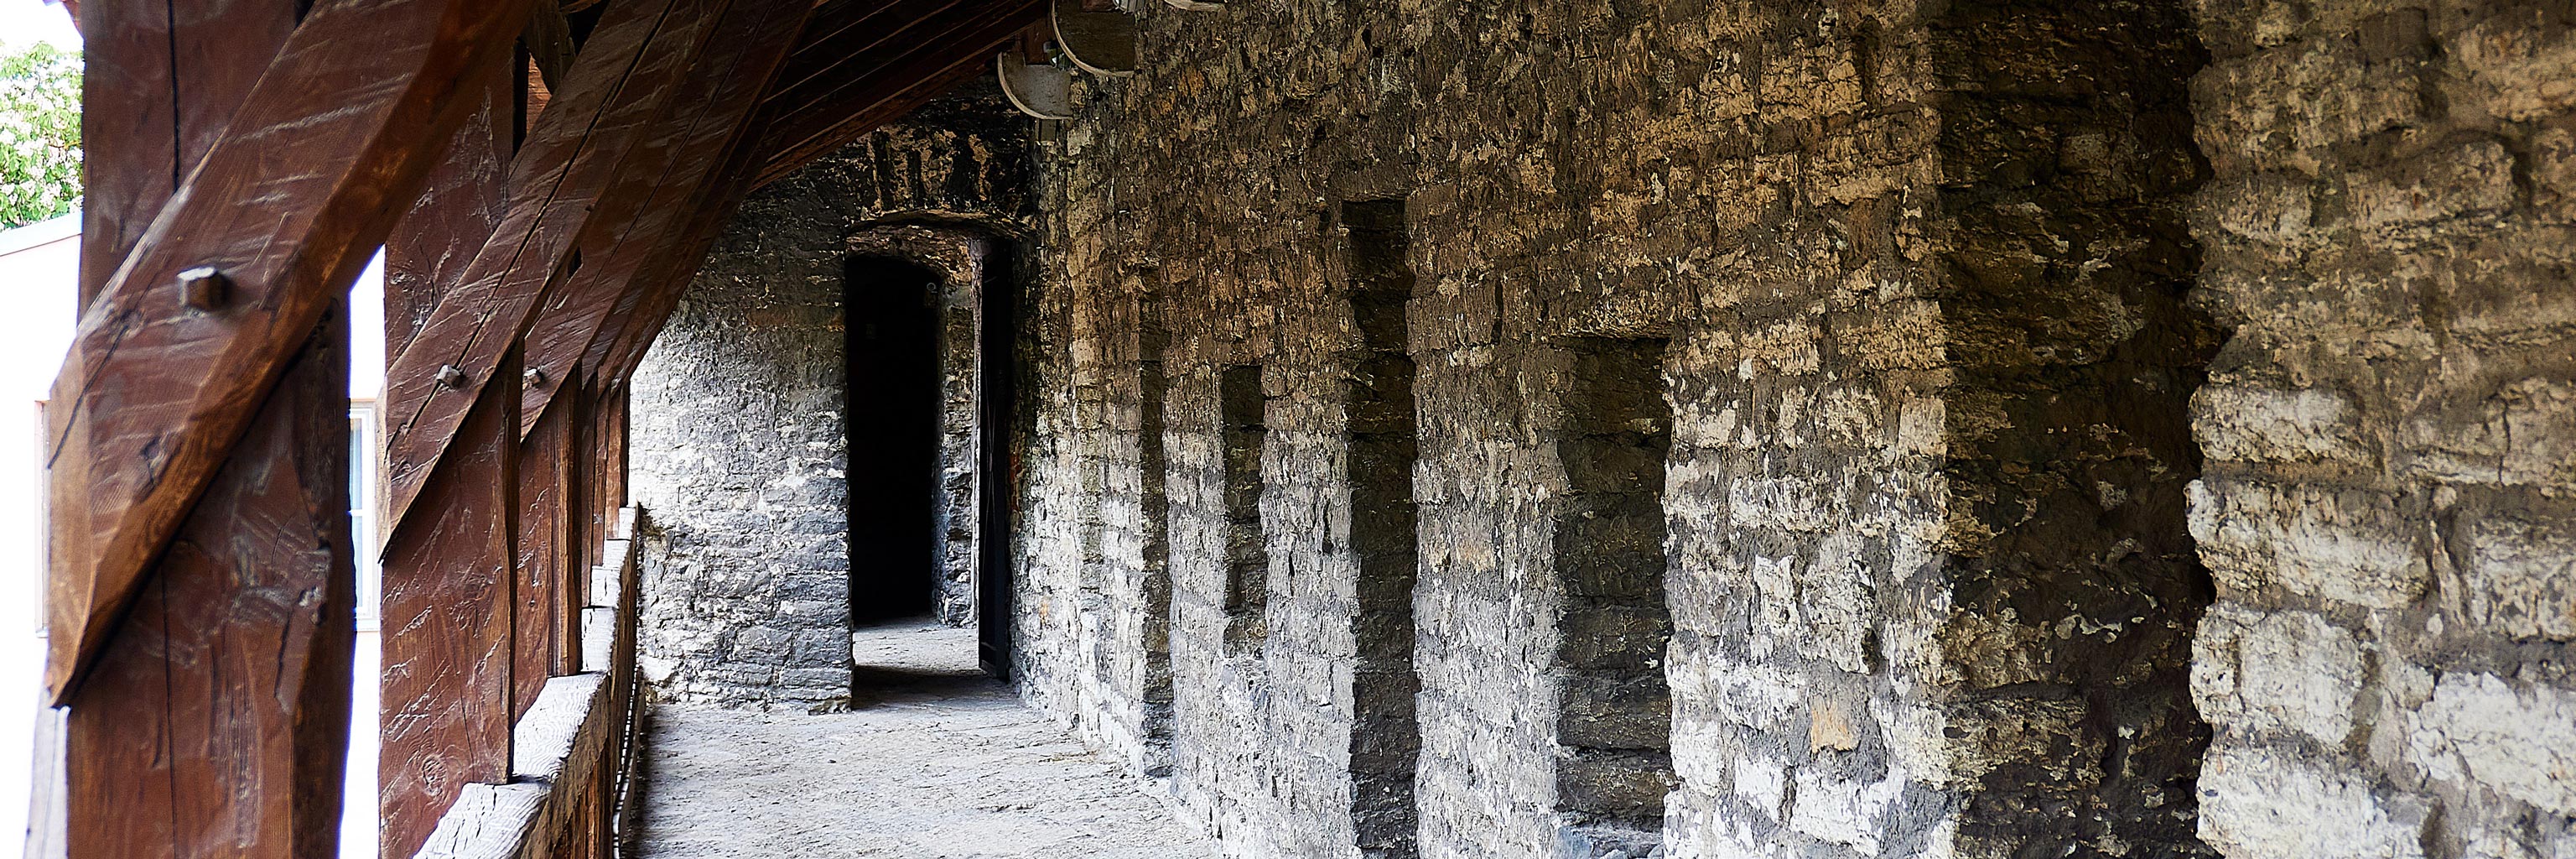 Stone brick hallway